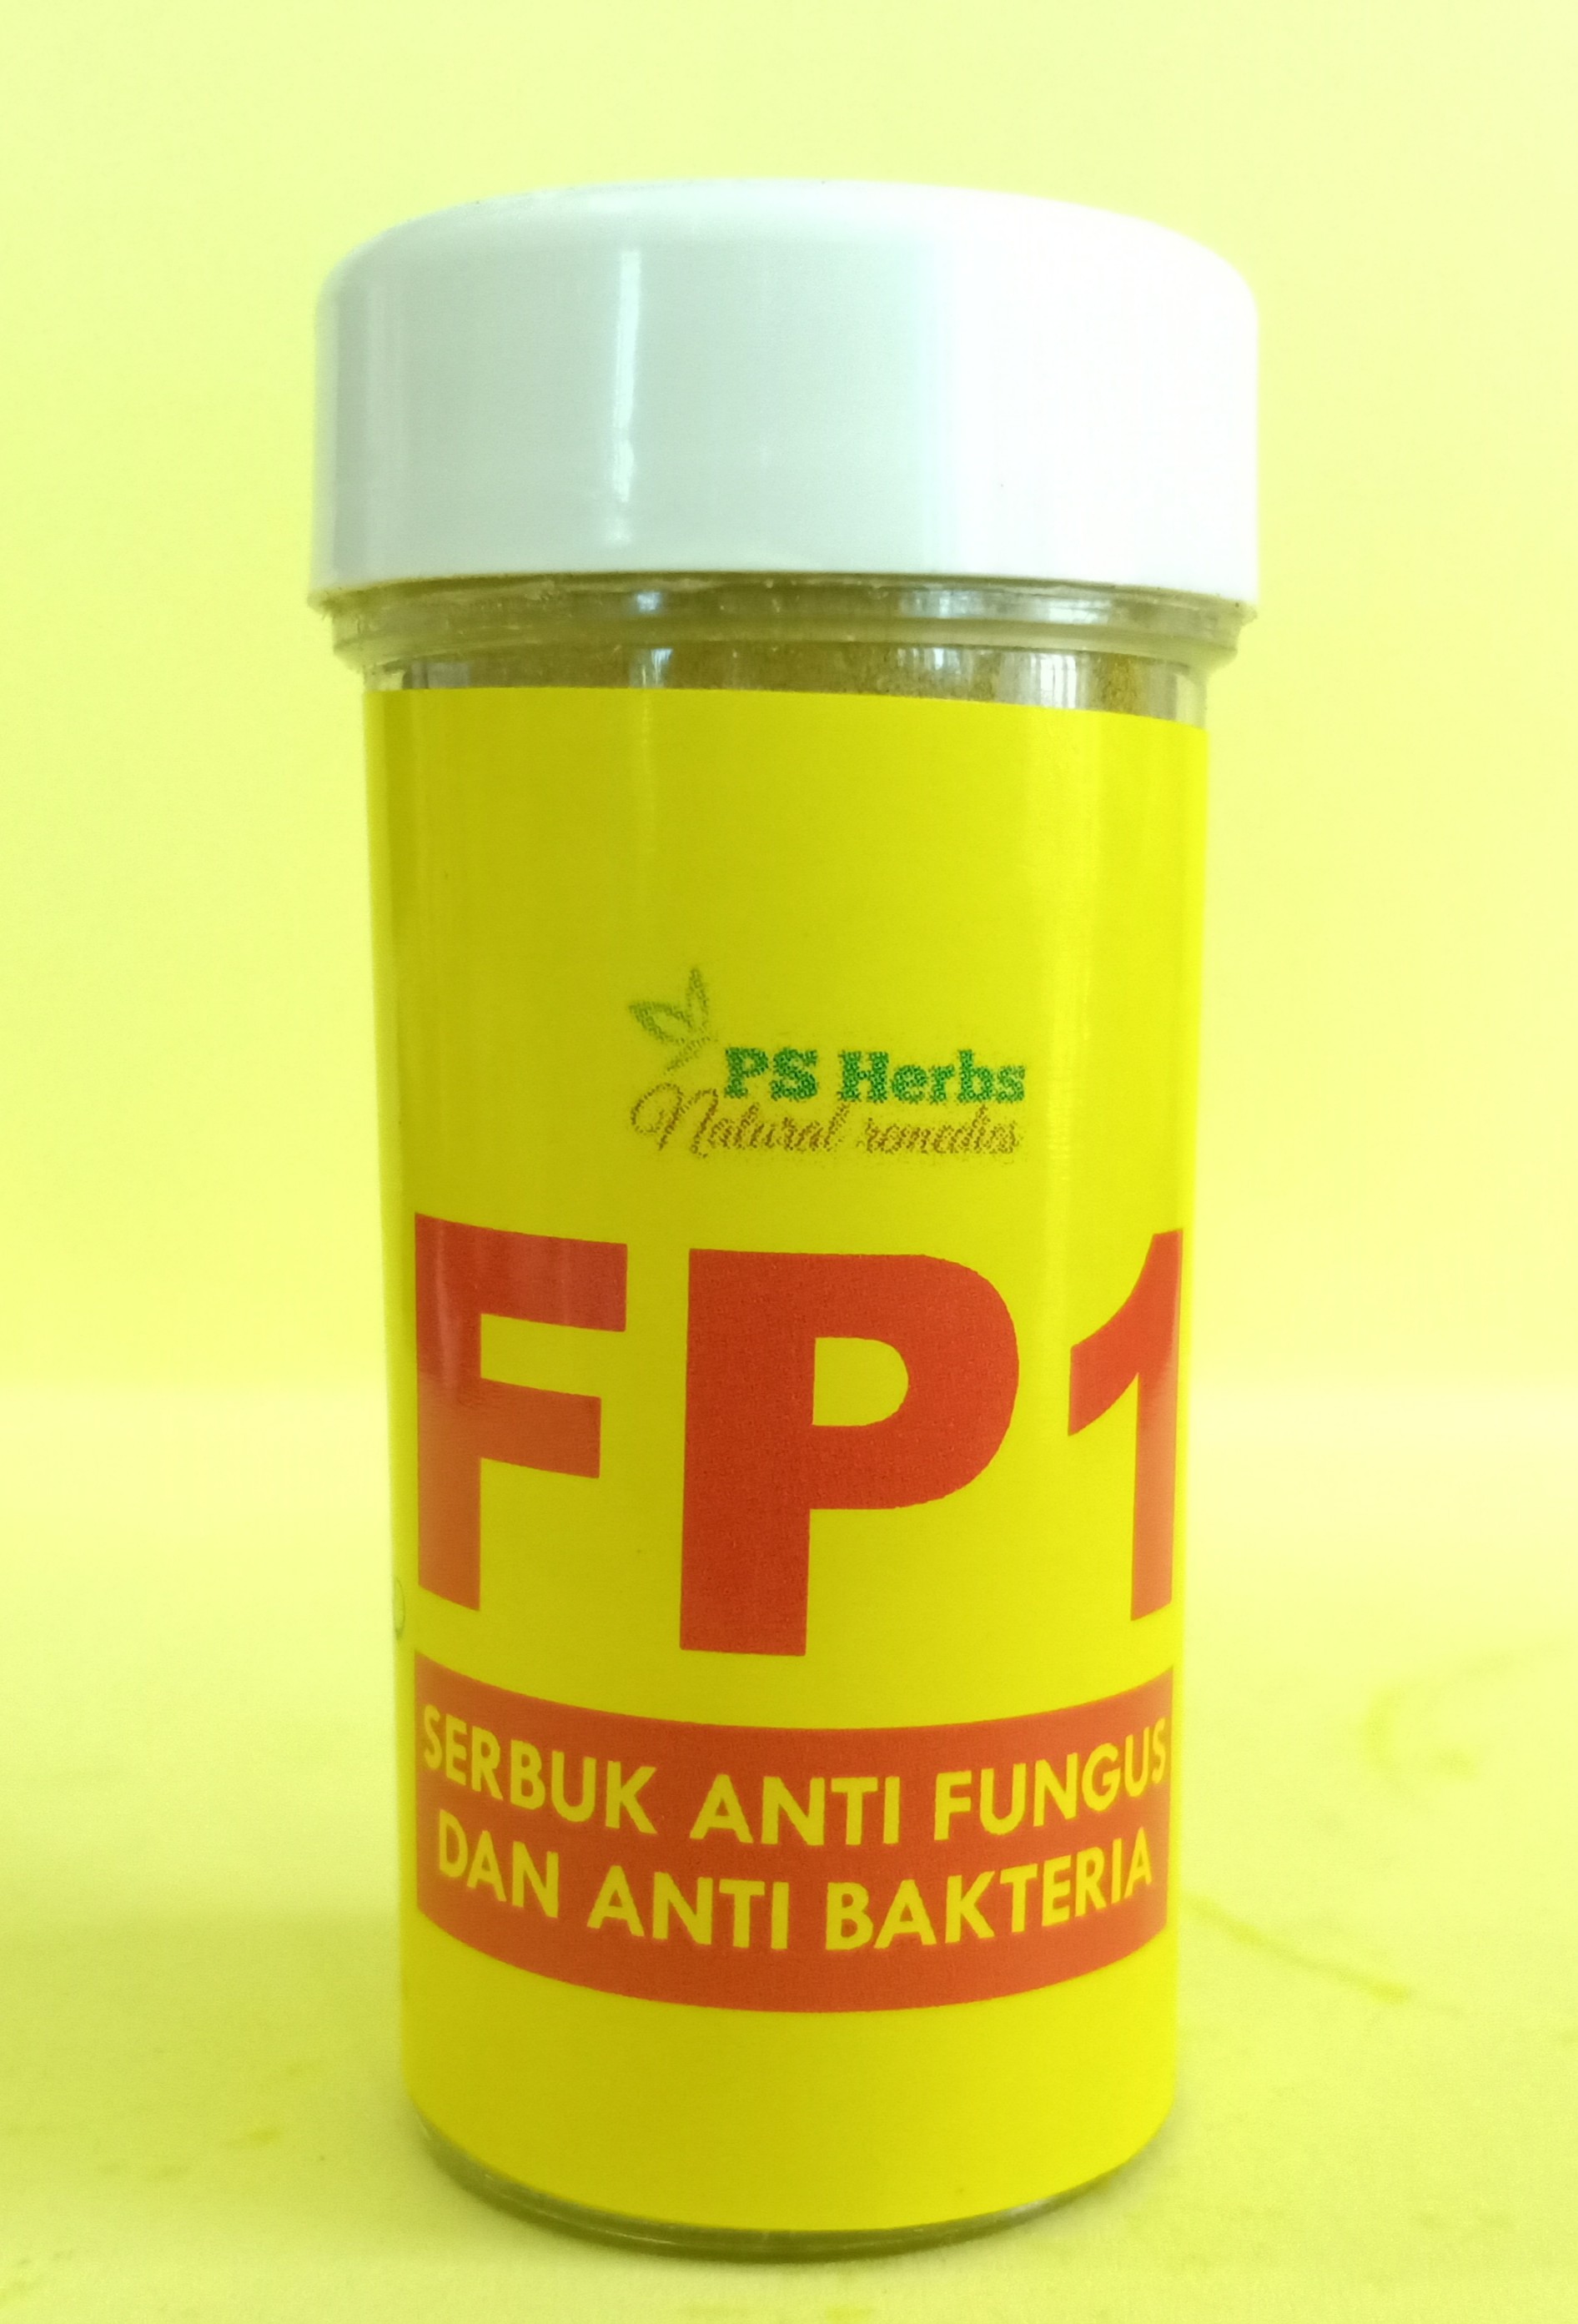 FP1 : Serbuk Antifungus/Antibakteria  PS Herbs Produk